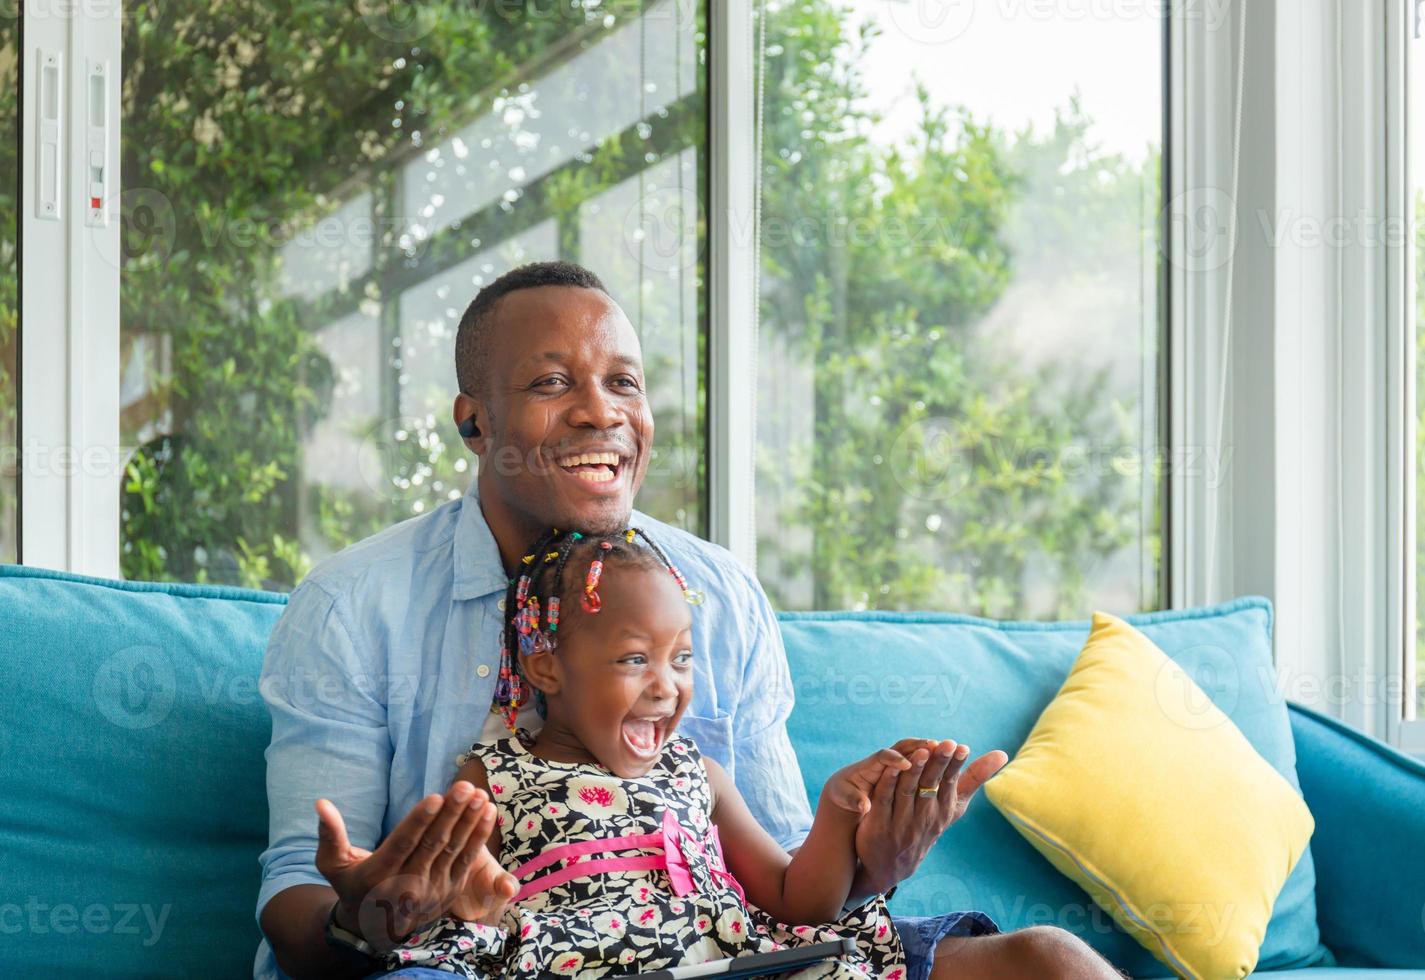 alegre pai e filha afro-americanos brincando na sala de estar, conceitos de família de felicidade foto